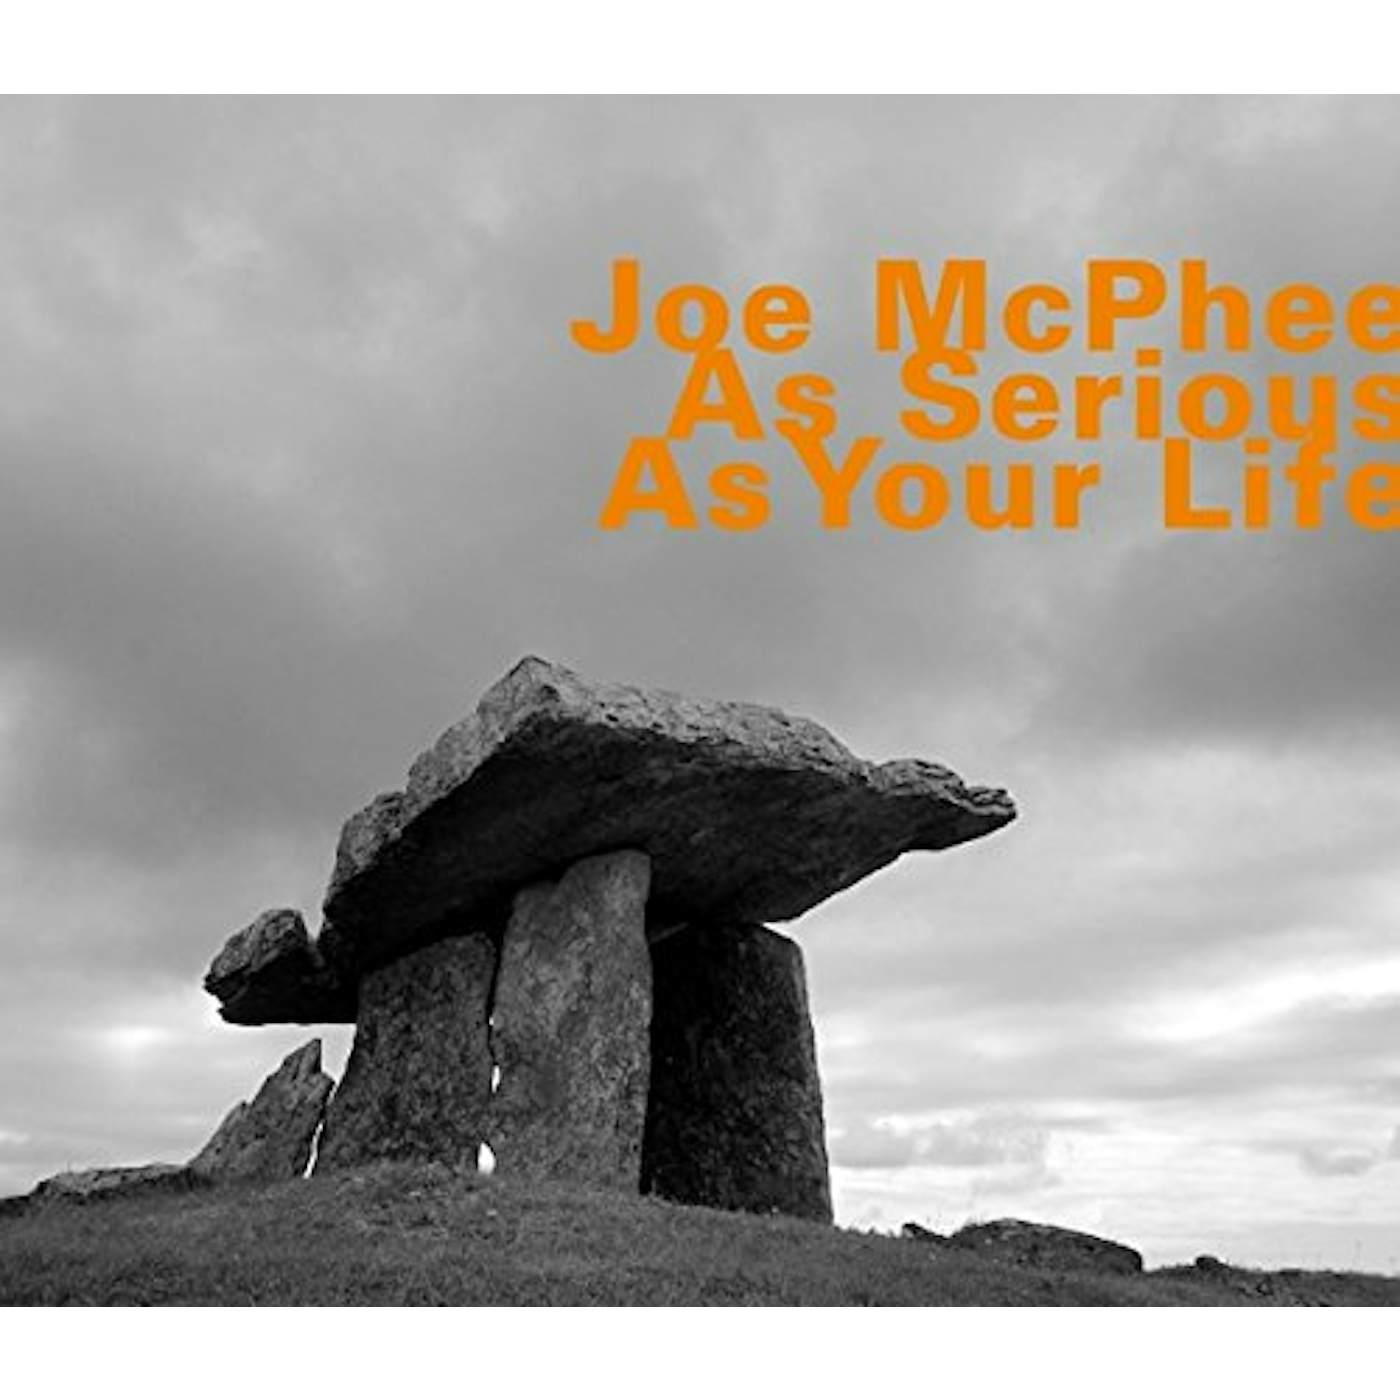 Joe Mcphee AS SERIOUS AS YOUR LIFE CD